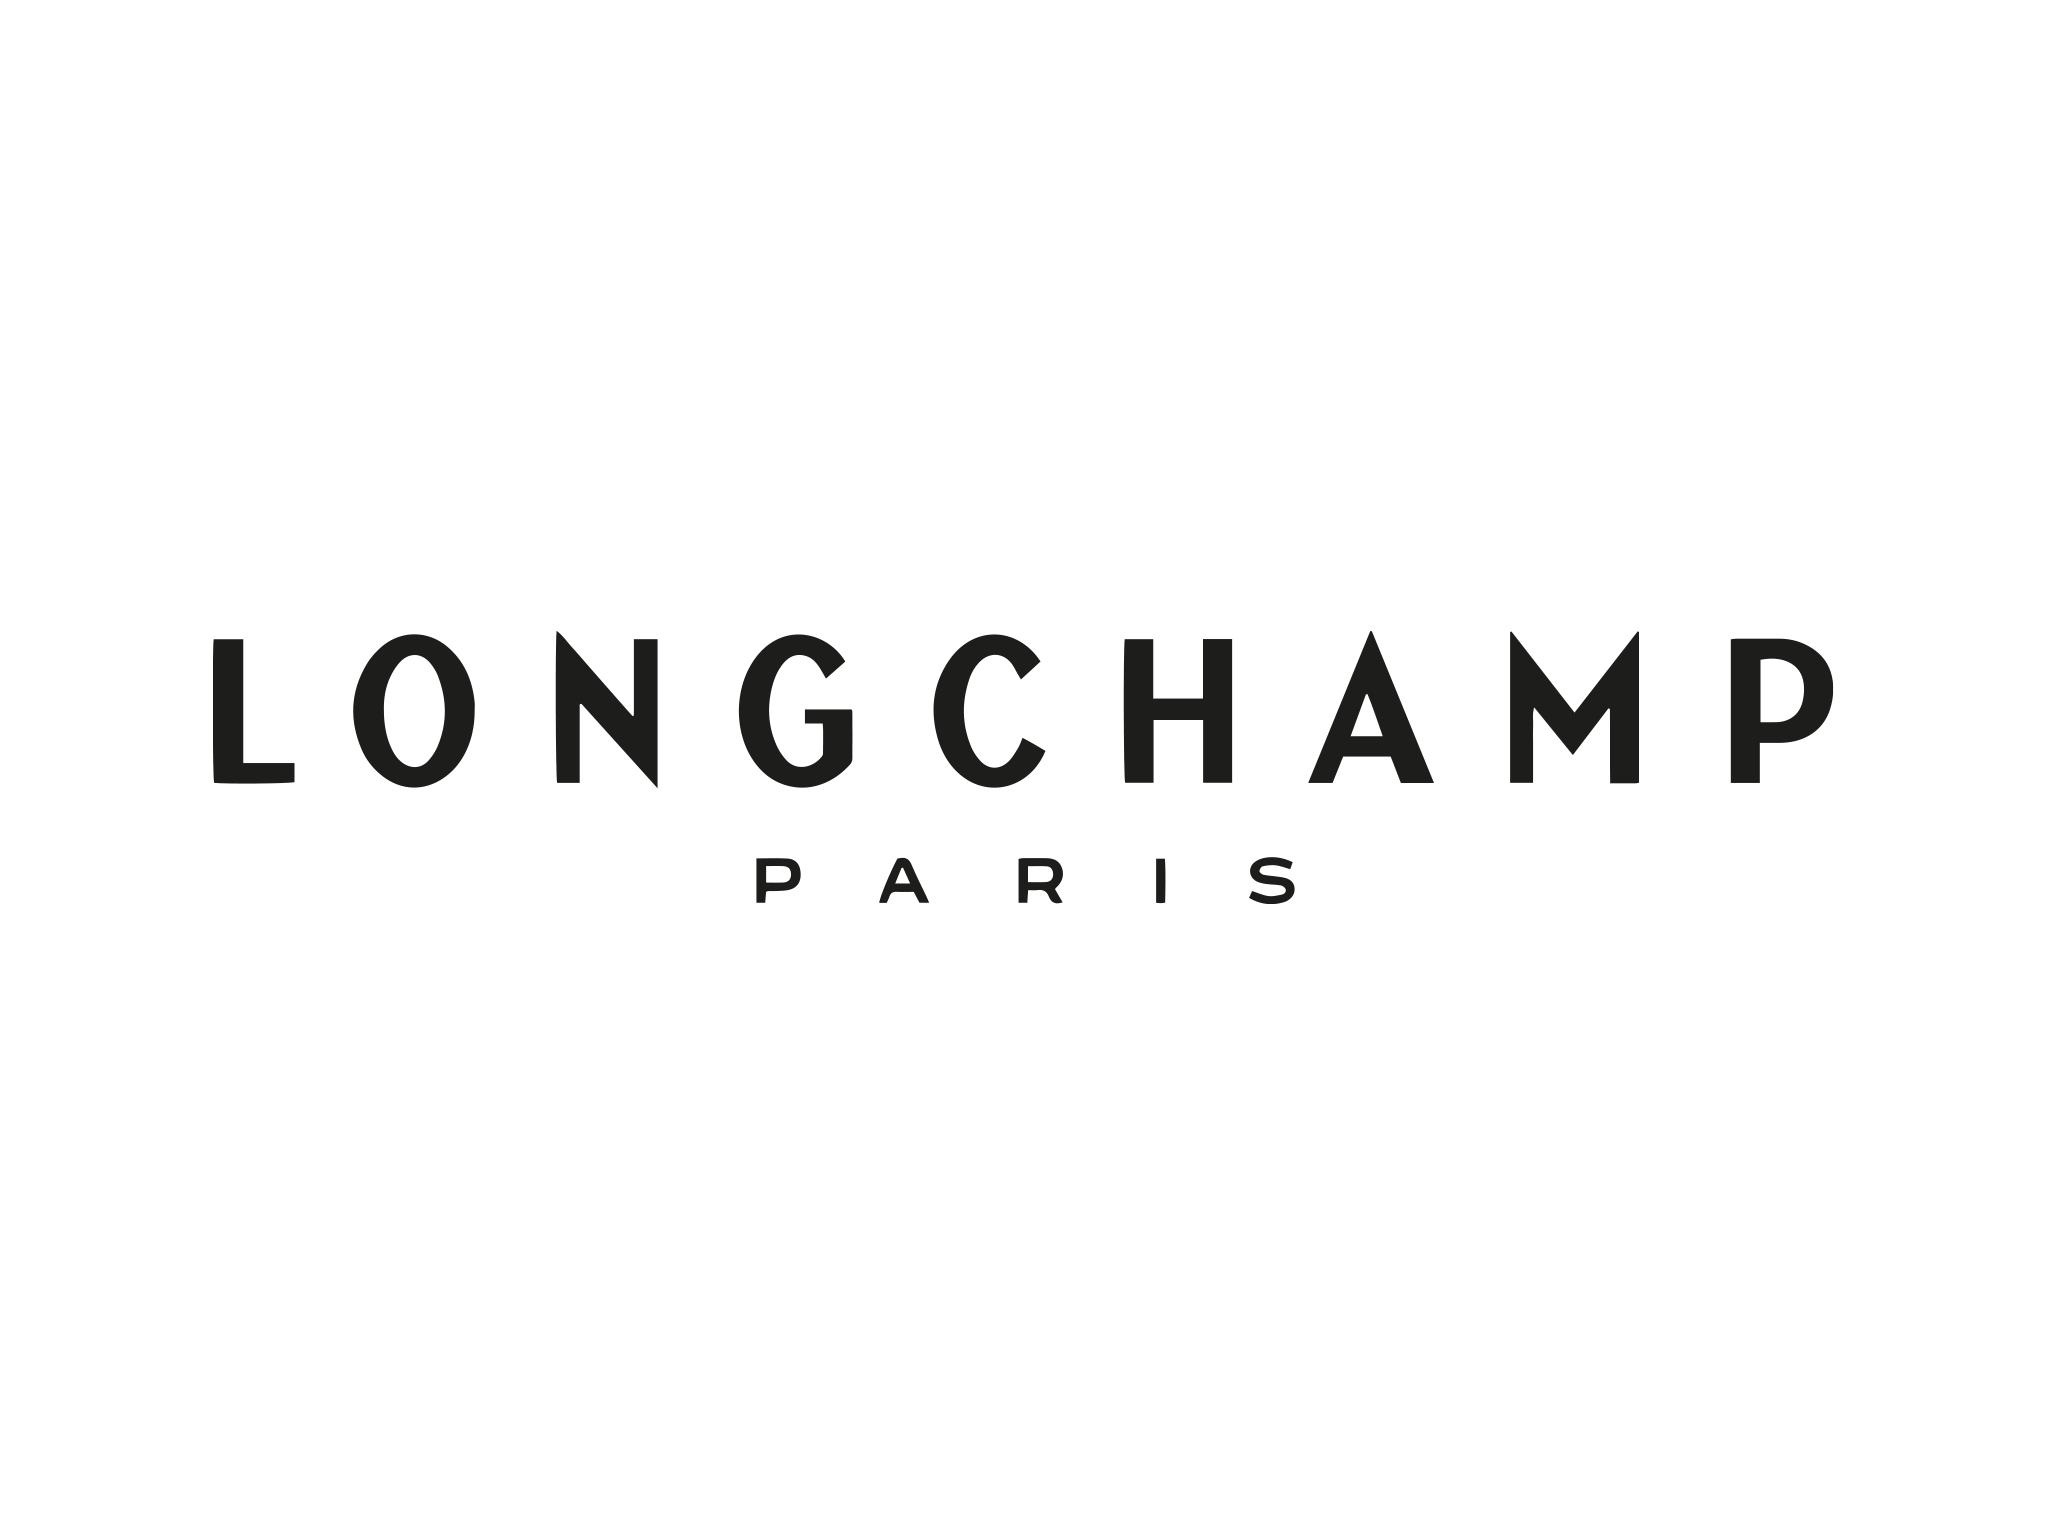 Logo Longchamp Paris